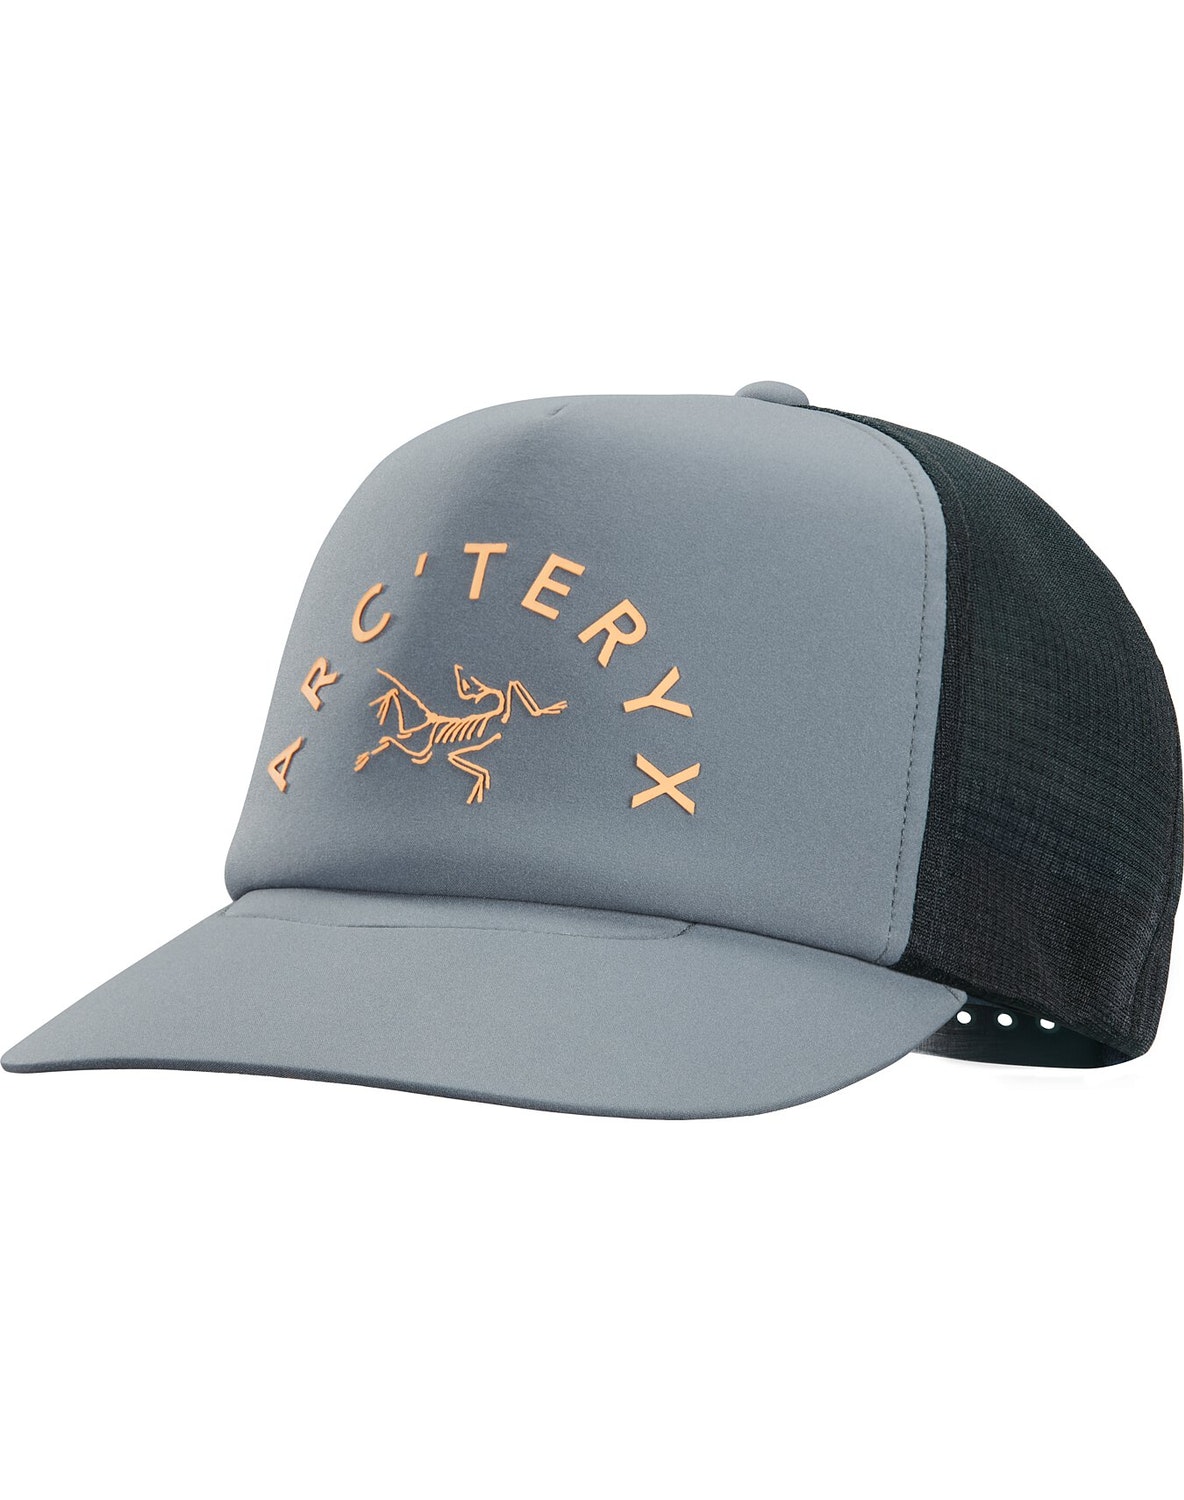 Hats Arc'teryx Arch'teryx Curved Brim Donna Verdi Scuro - IT-7775616